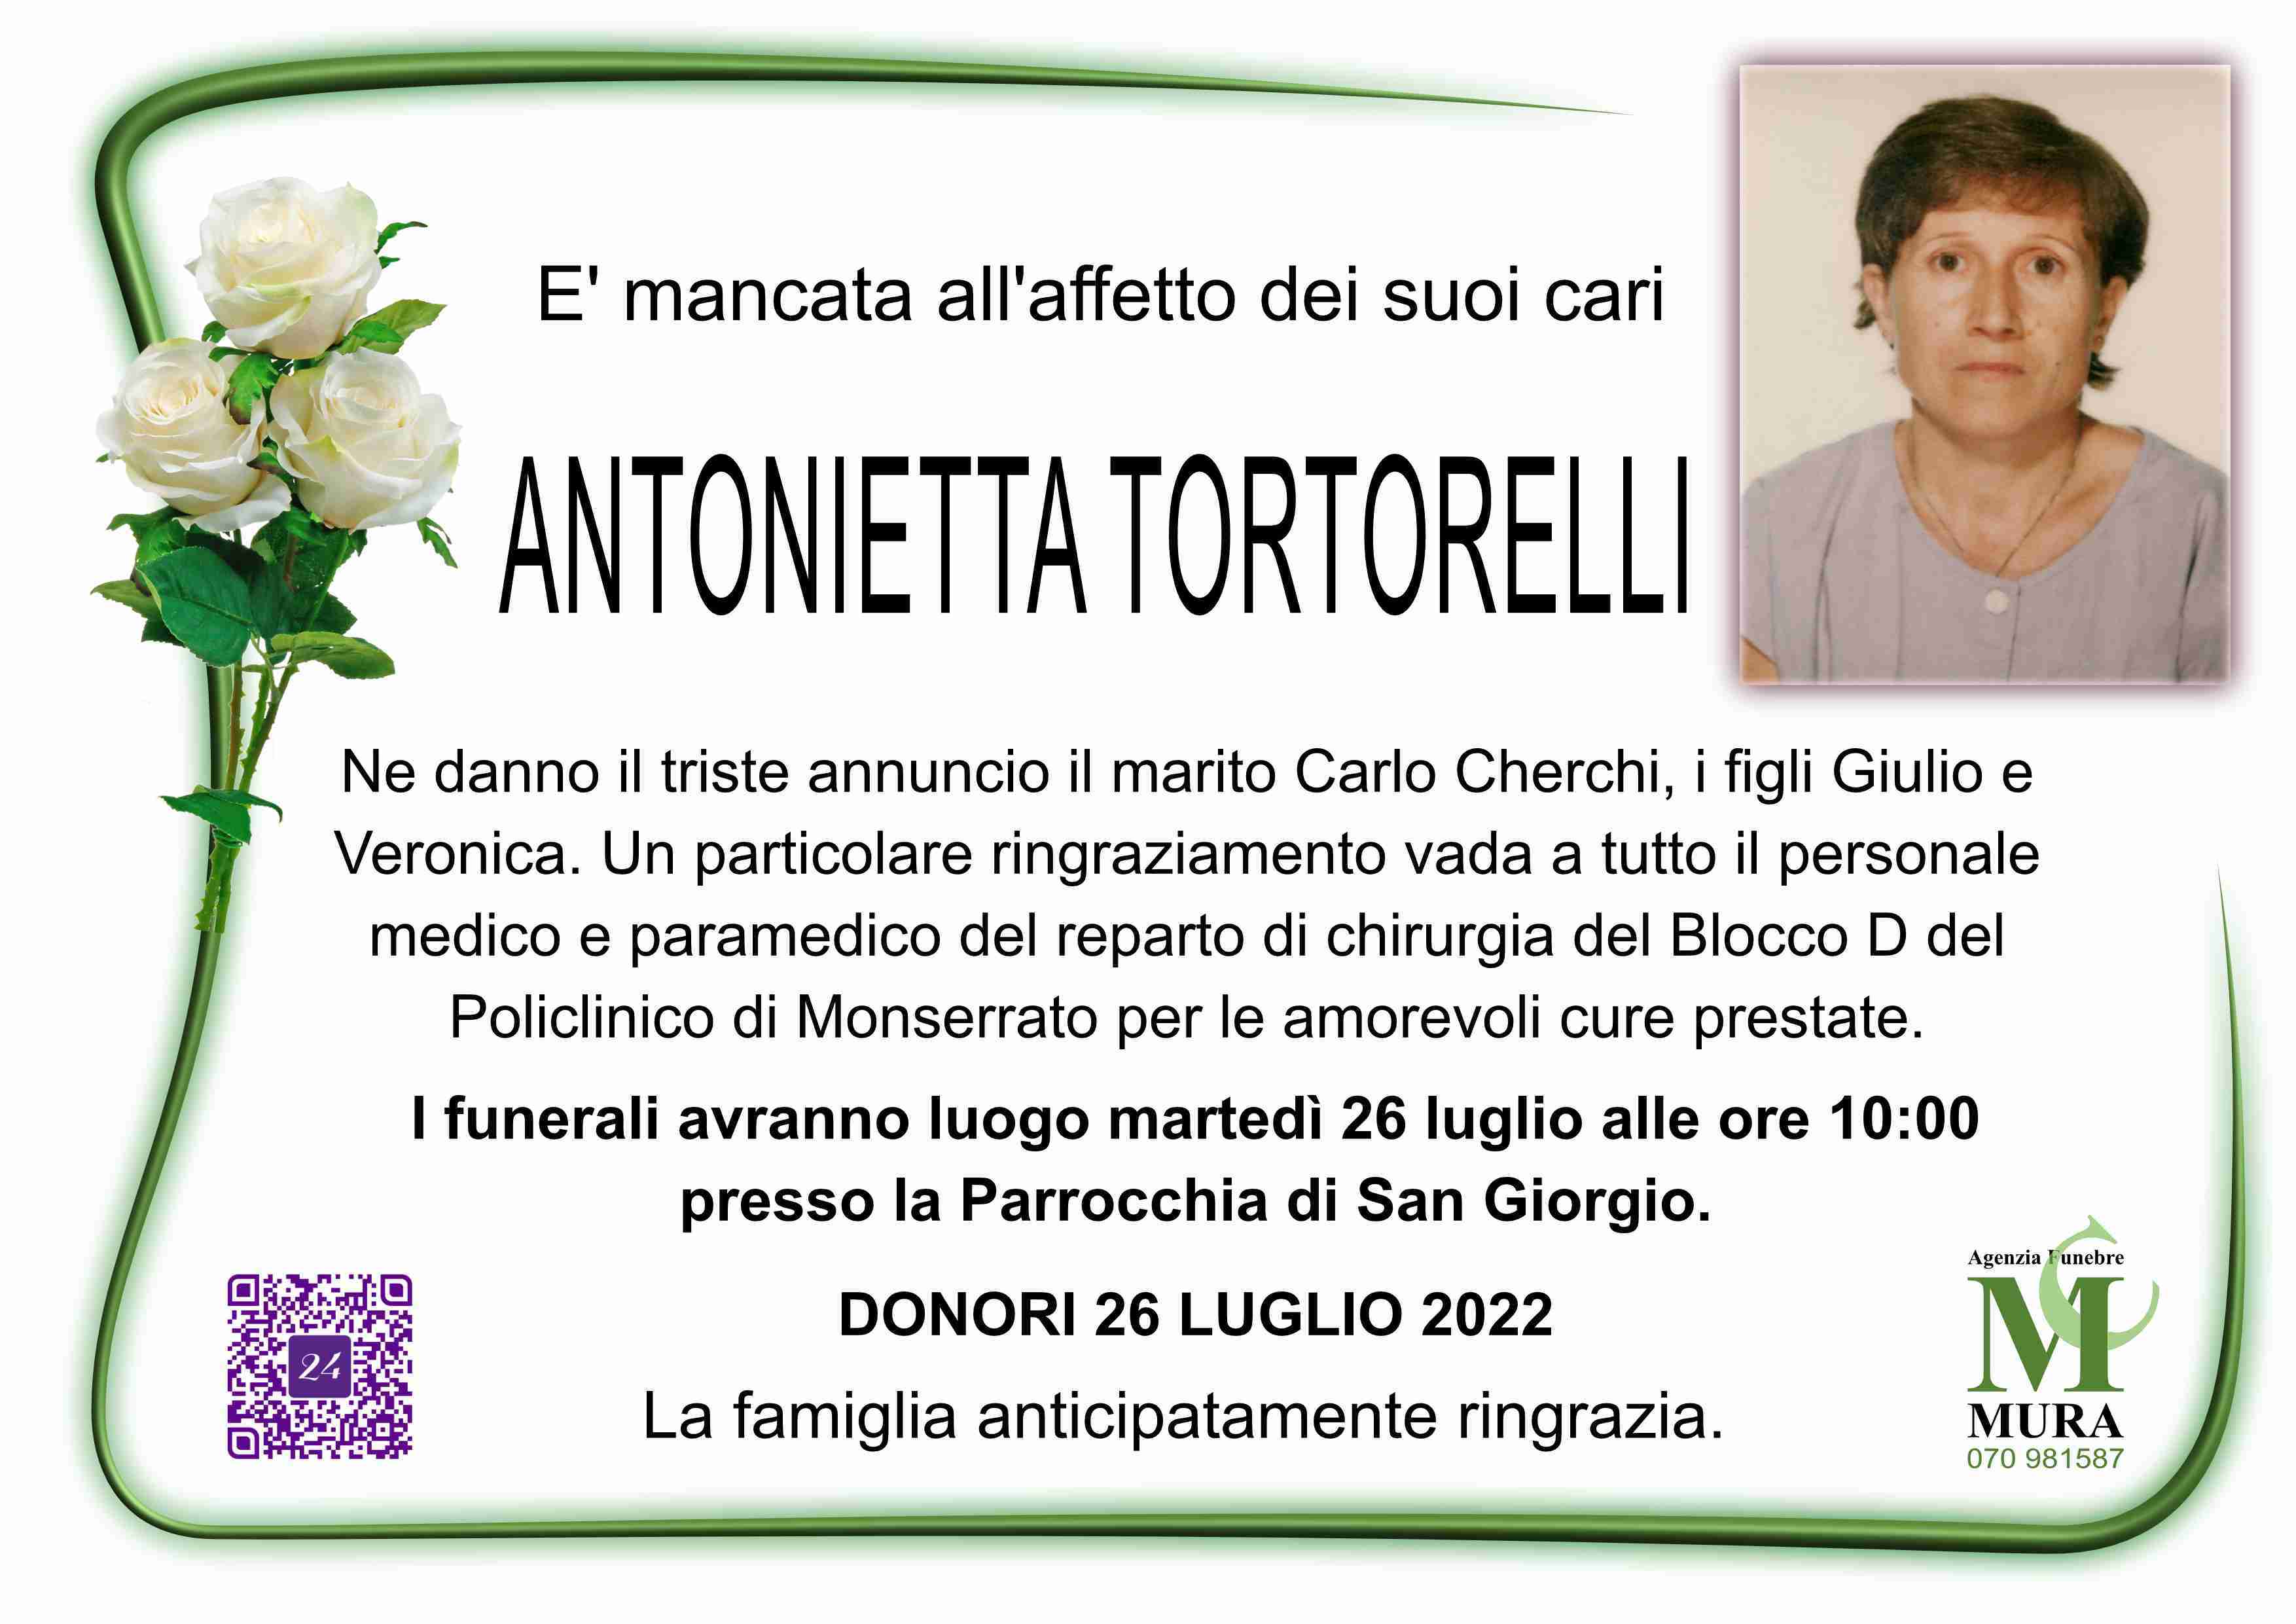 Antonietta Tortorelli